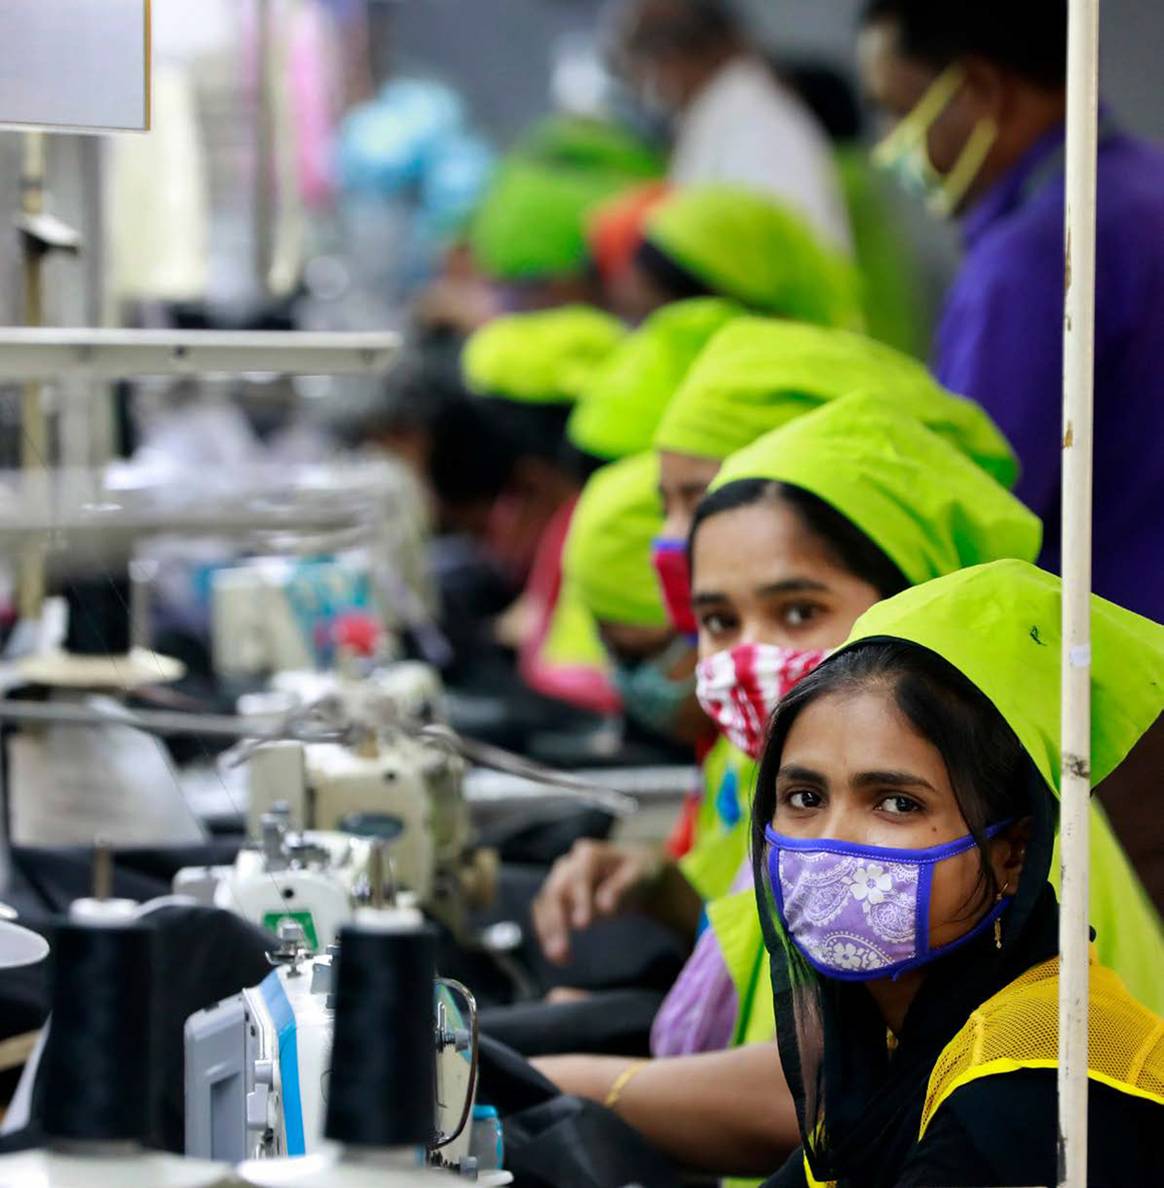 Photo Credits: University of Aberdeen / Shutterstock - Trabajadores de la industria textil de Bangladesh, vía el informe “Impact of global clothing retailers’ unfair practices on Bangladeshi suppliers during Covid-19”.